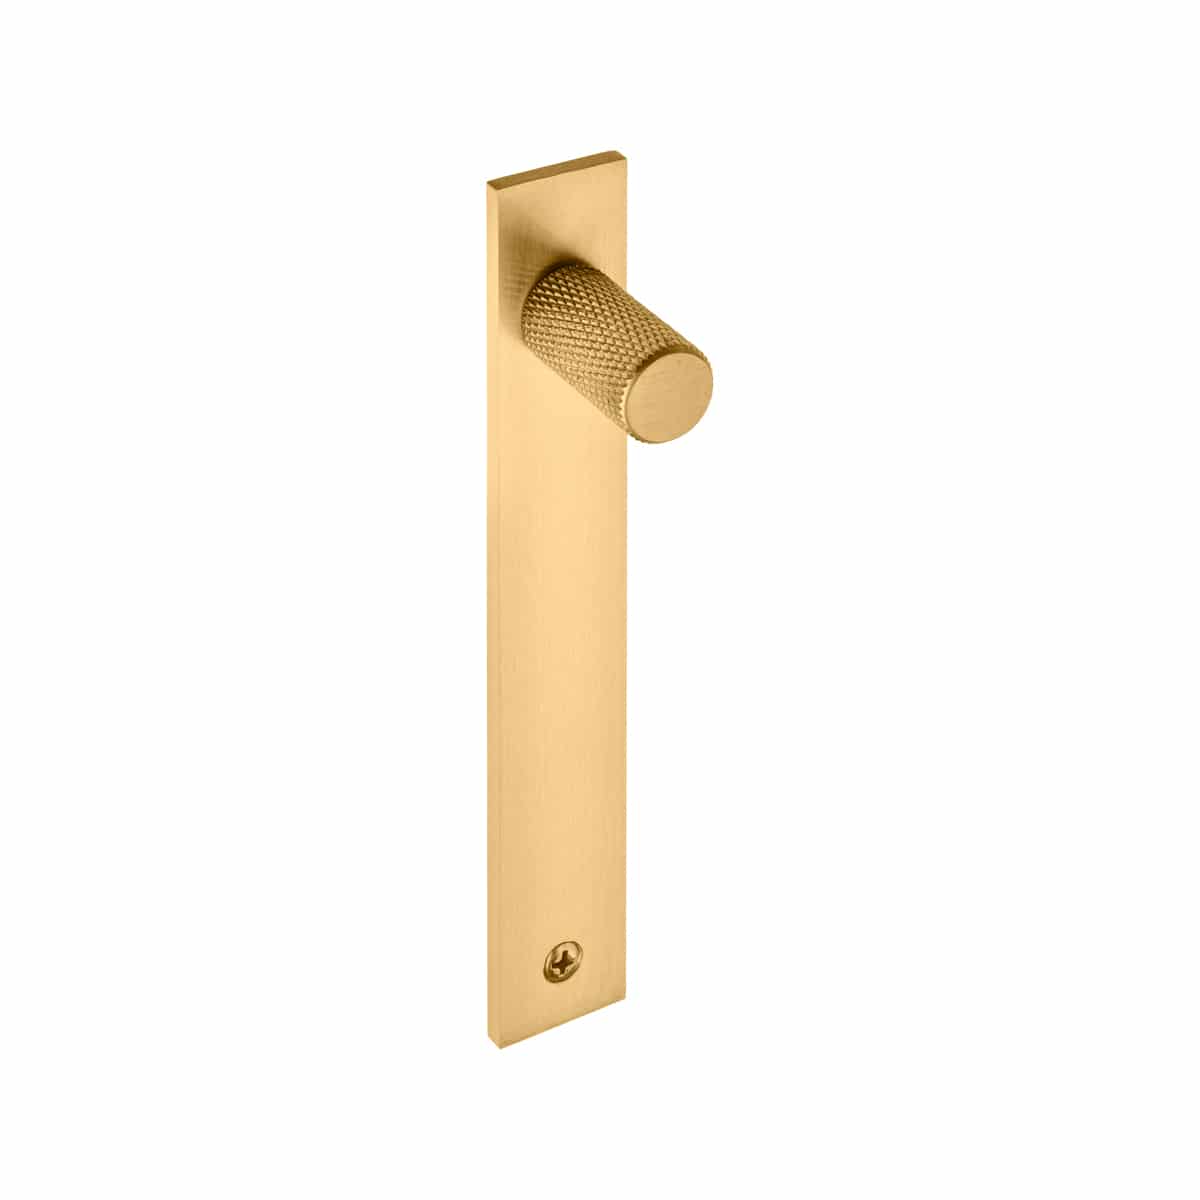 Satin brass knurled knob handle